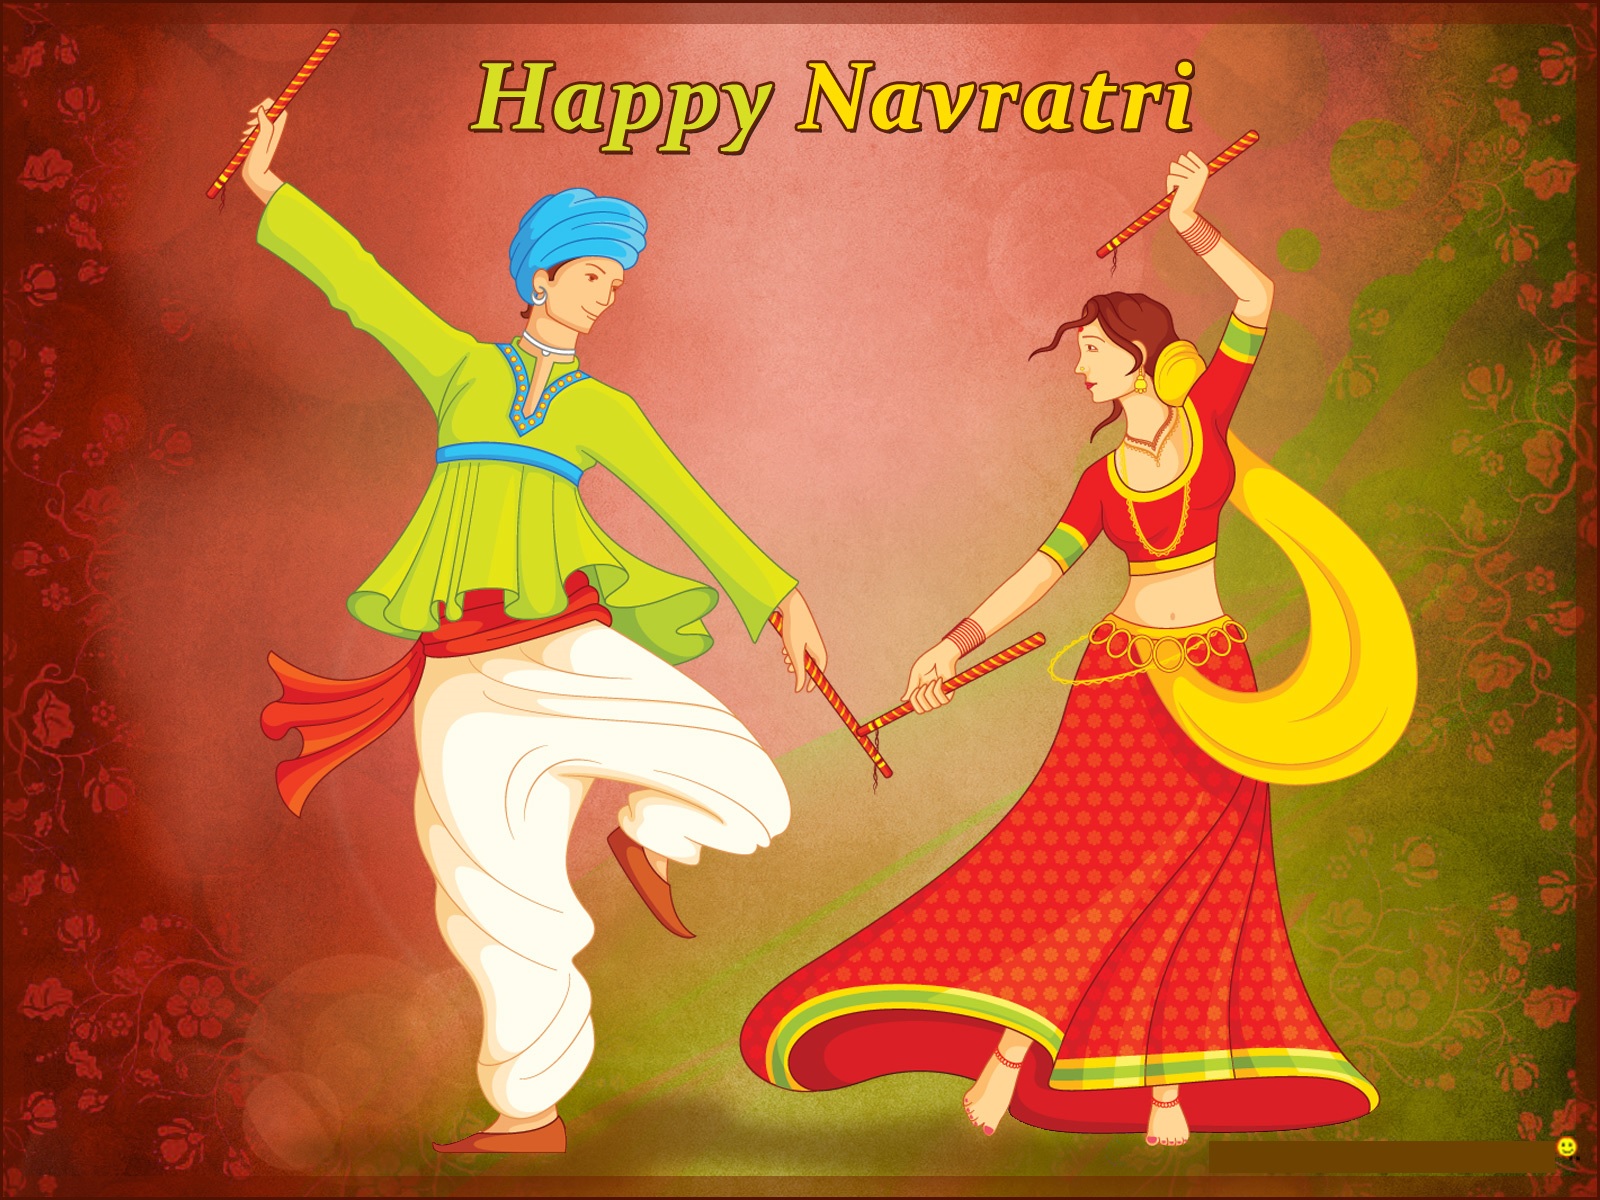 Happy Navaratri 2017 Images HD Wallpapers - Navratri ...